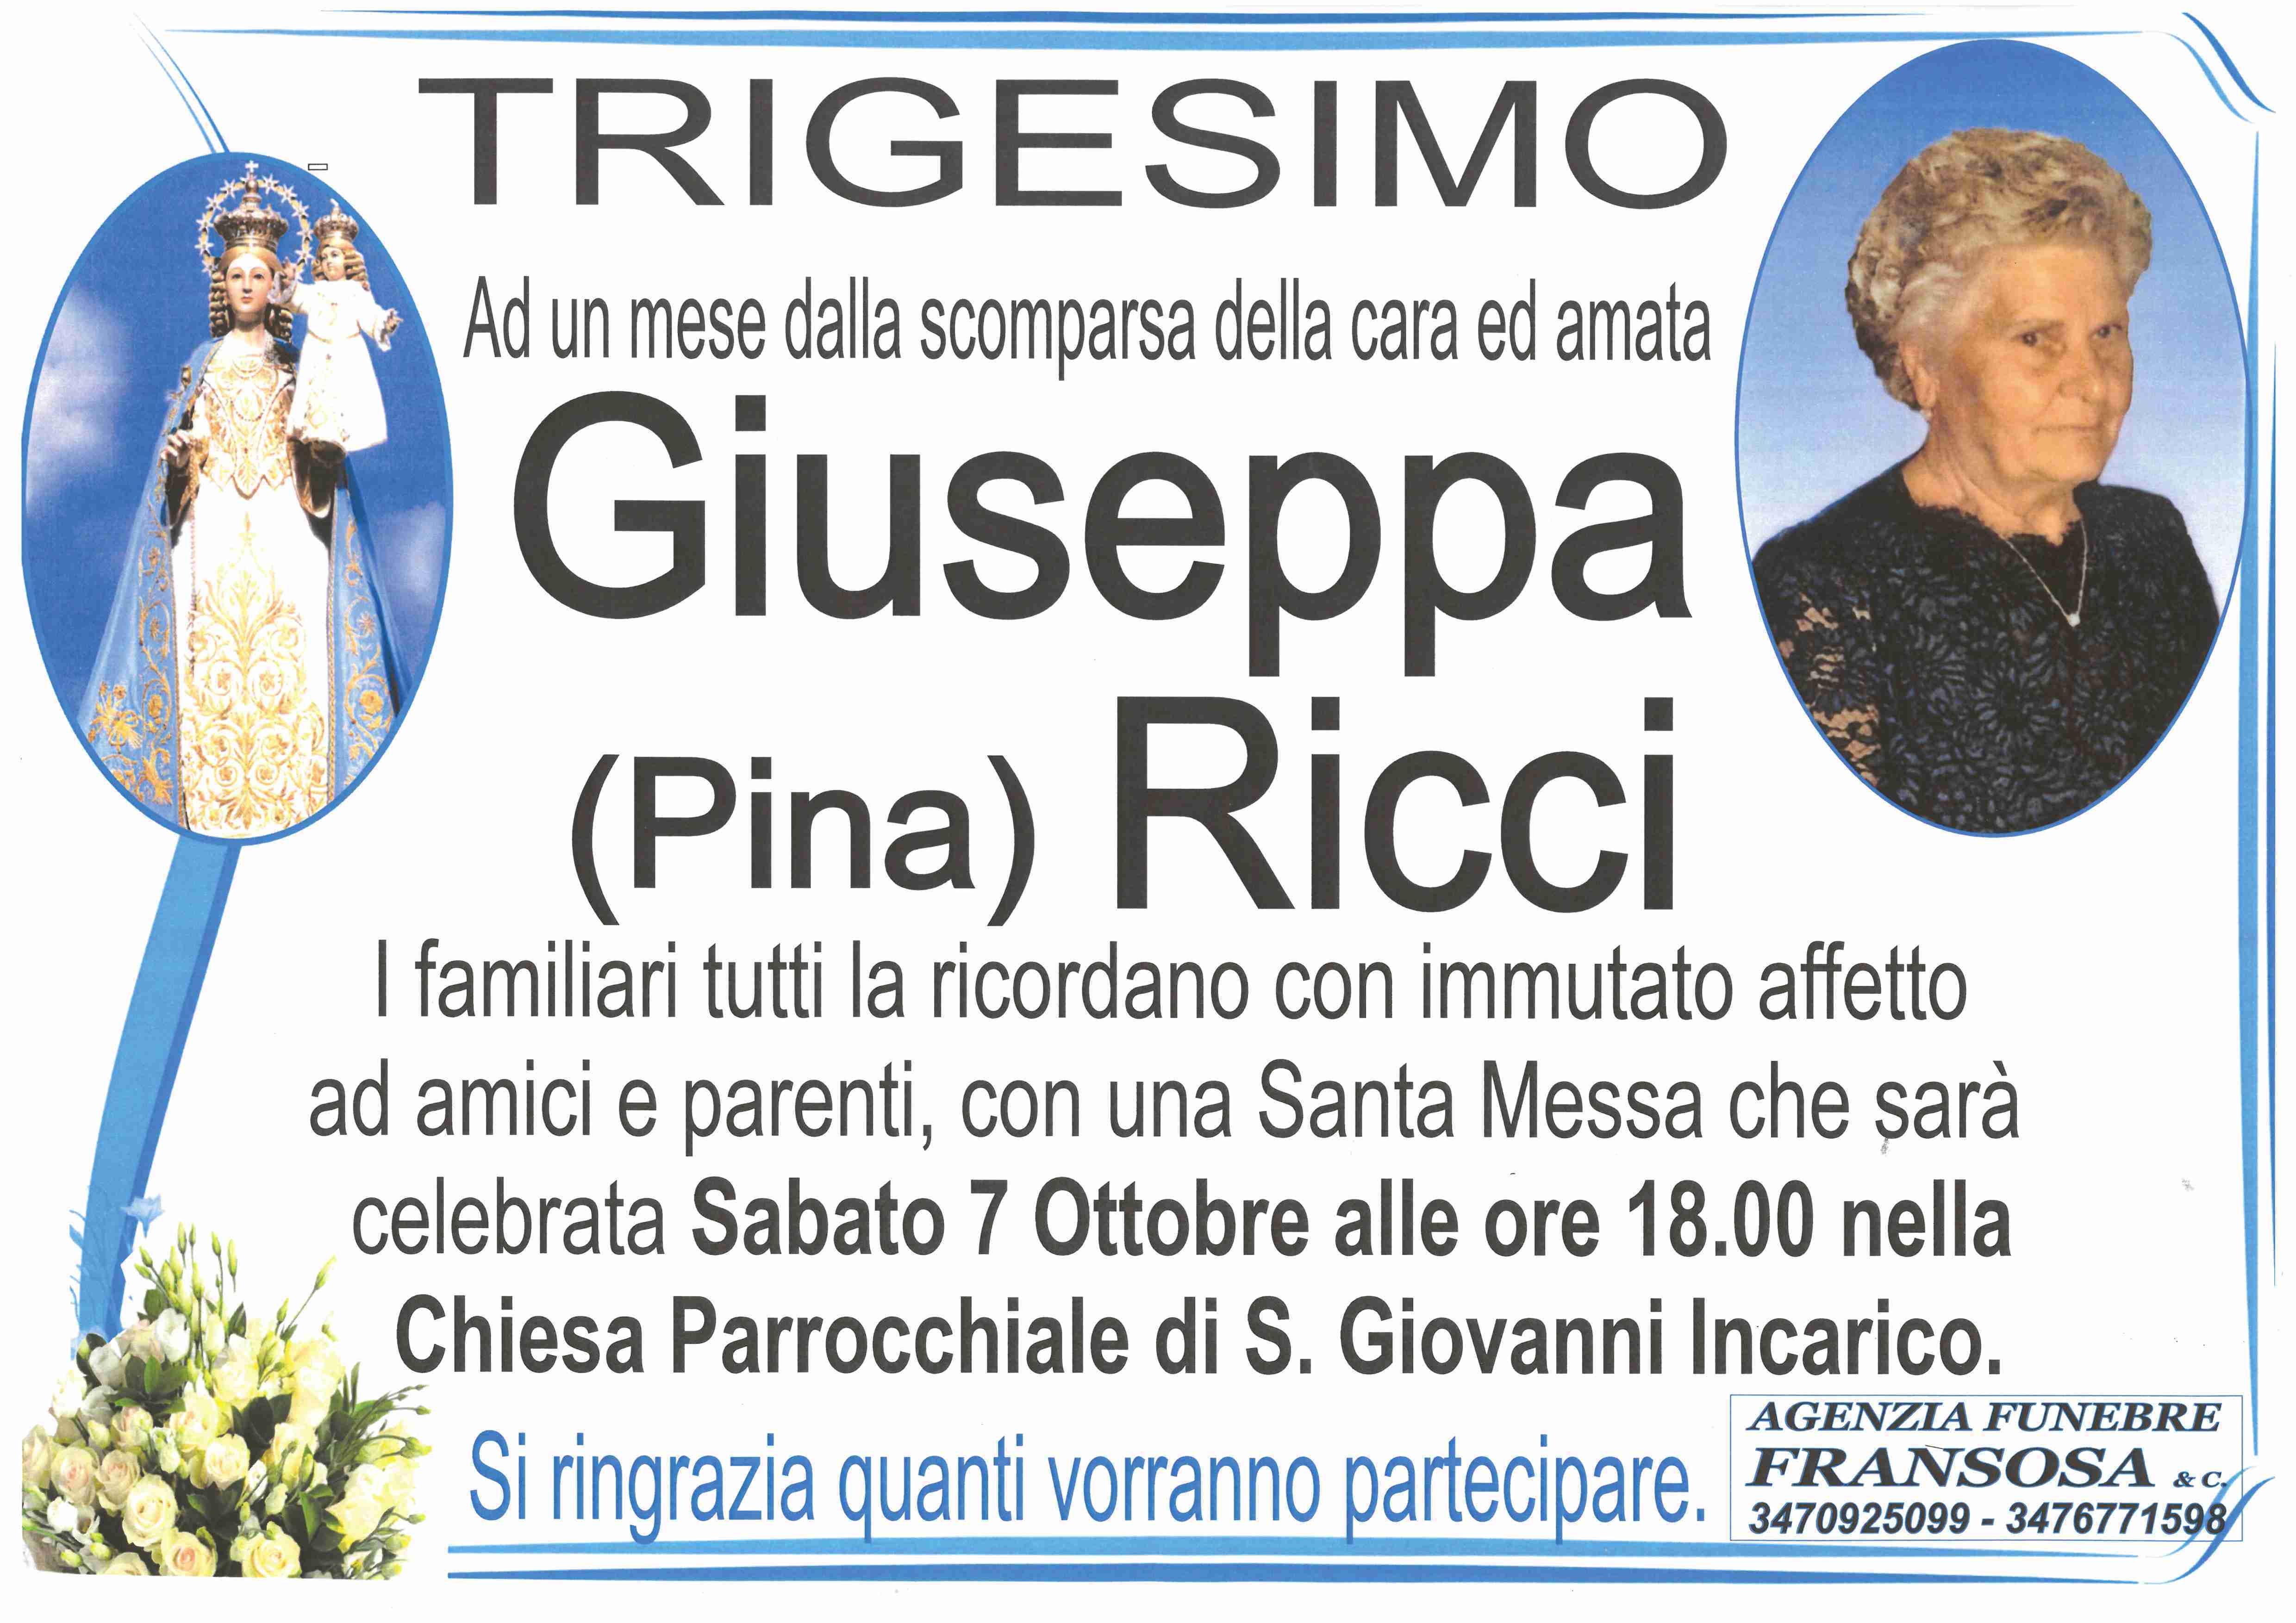 Giuseppa Ricci